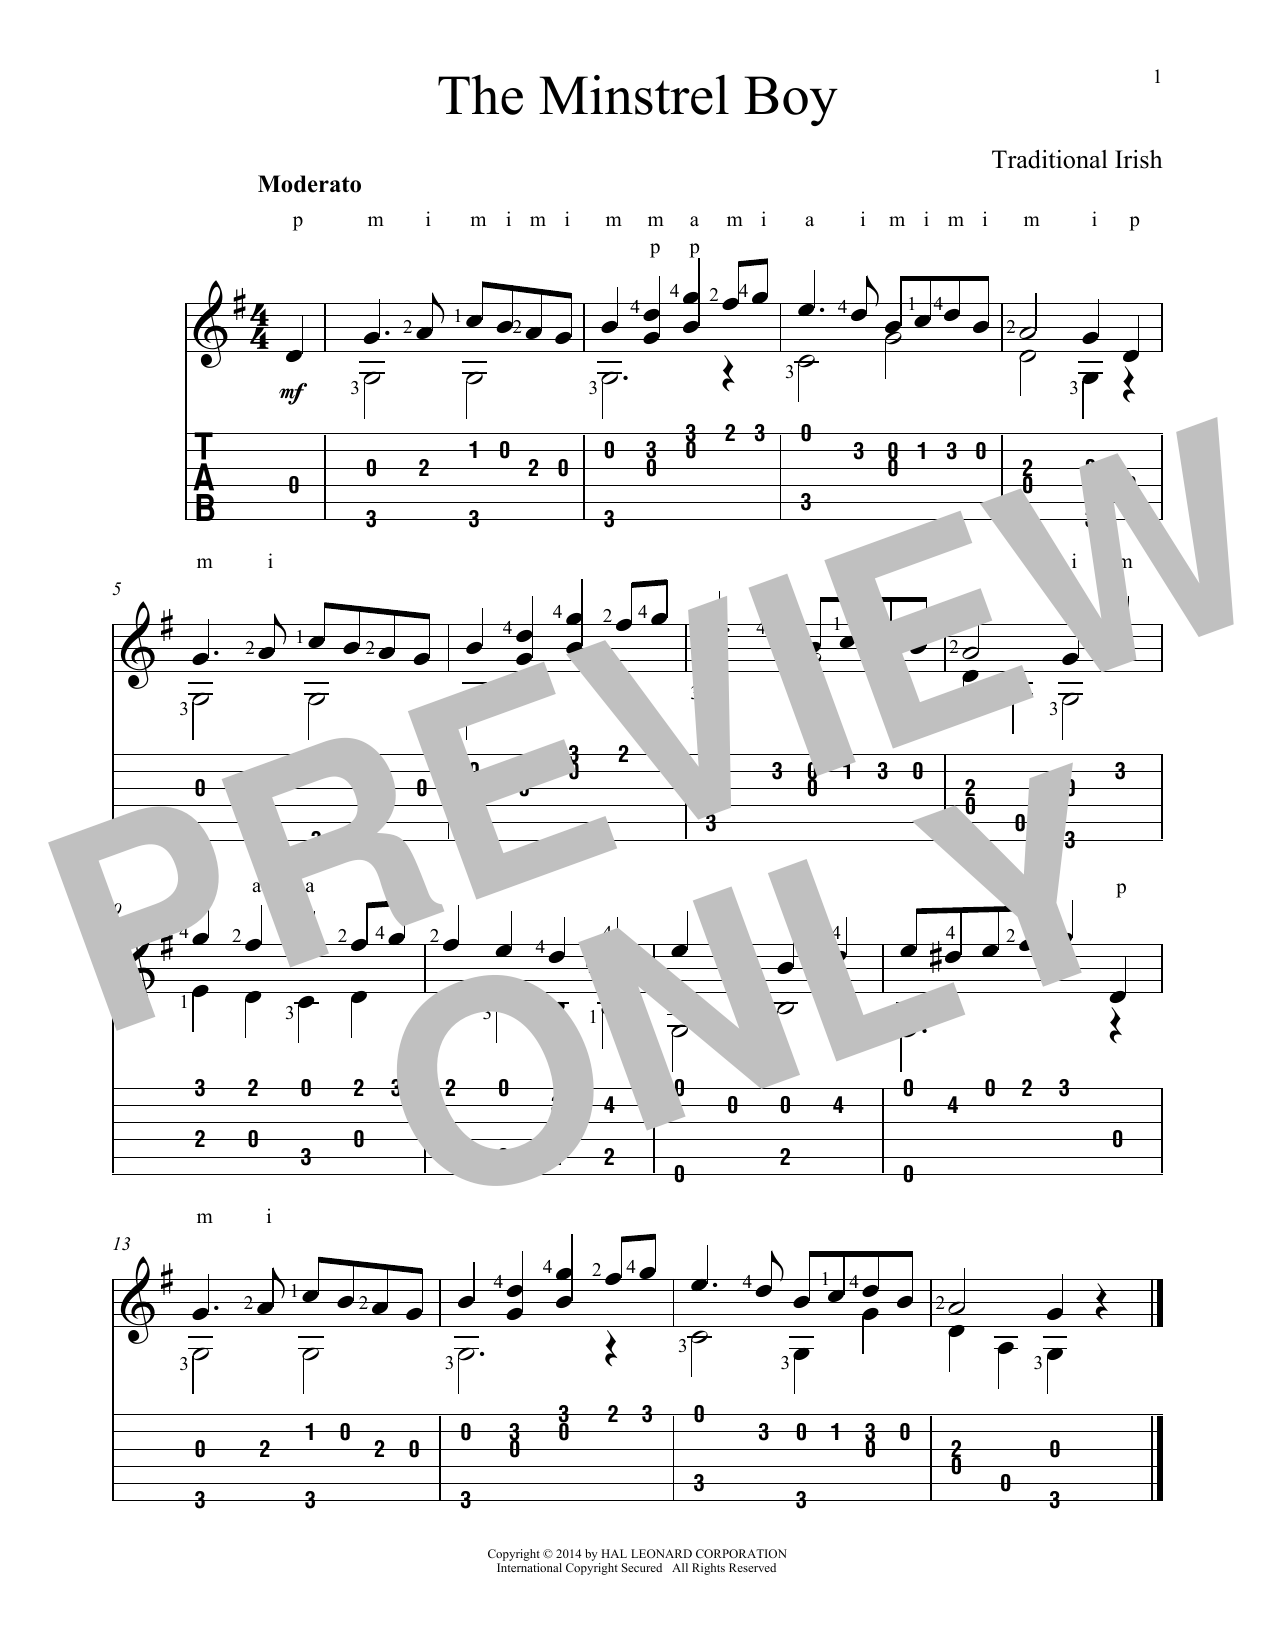 John Hill Minstrel Boy Sheet Music Notes & Chords for Guitar Tab - Download or Print PDF